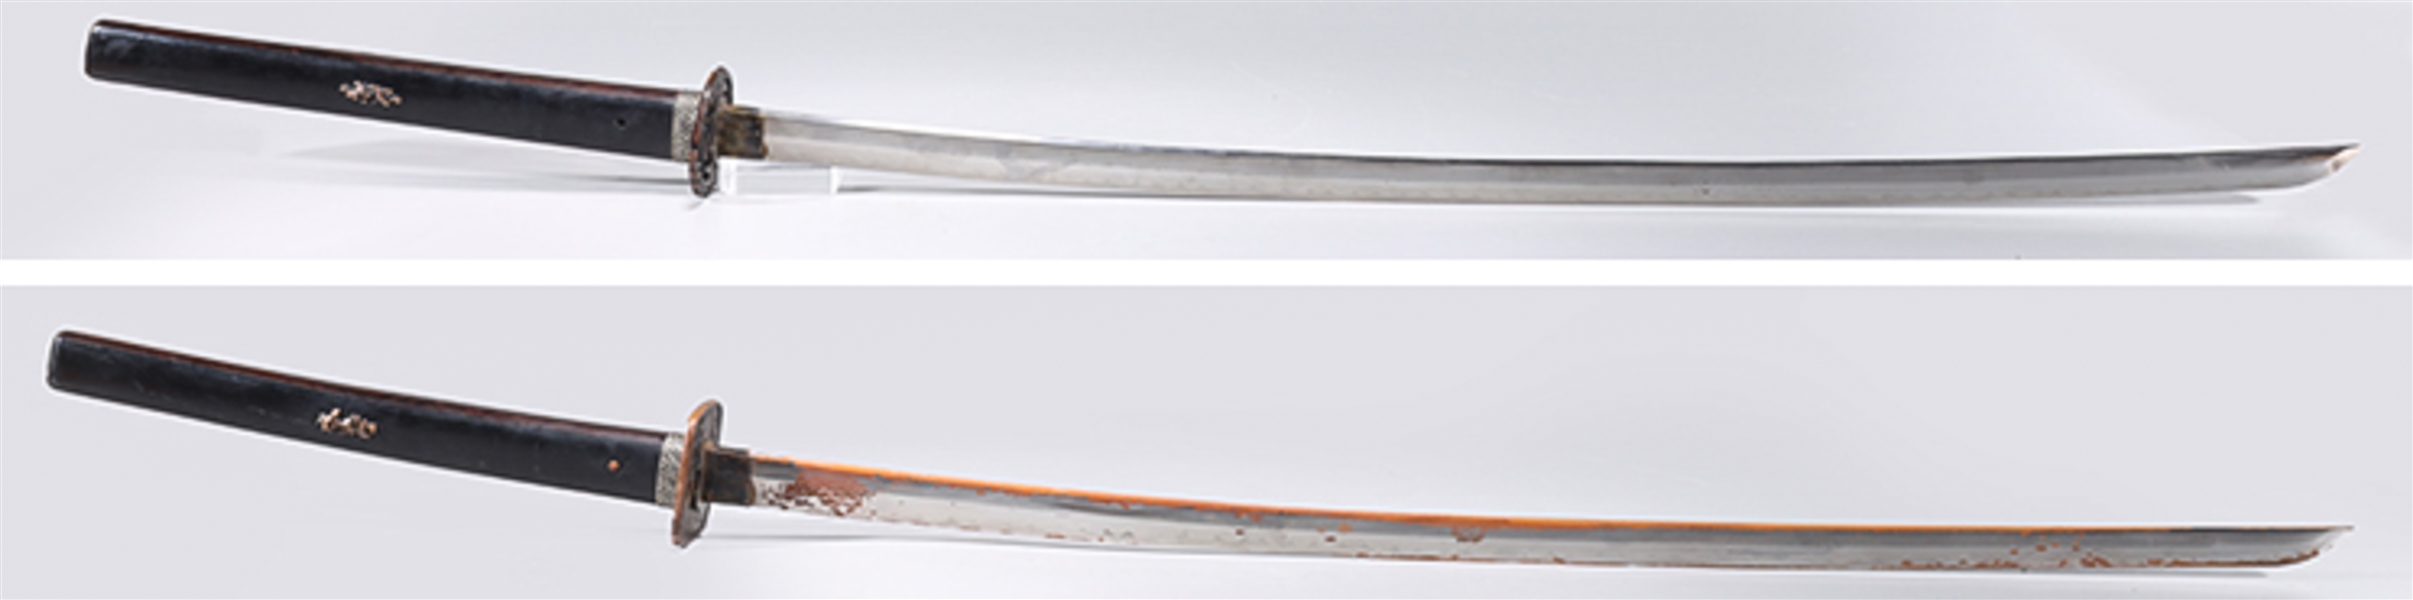 Two Japanese sheathed samurai swords,